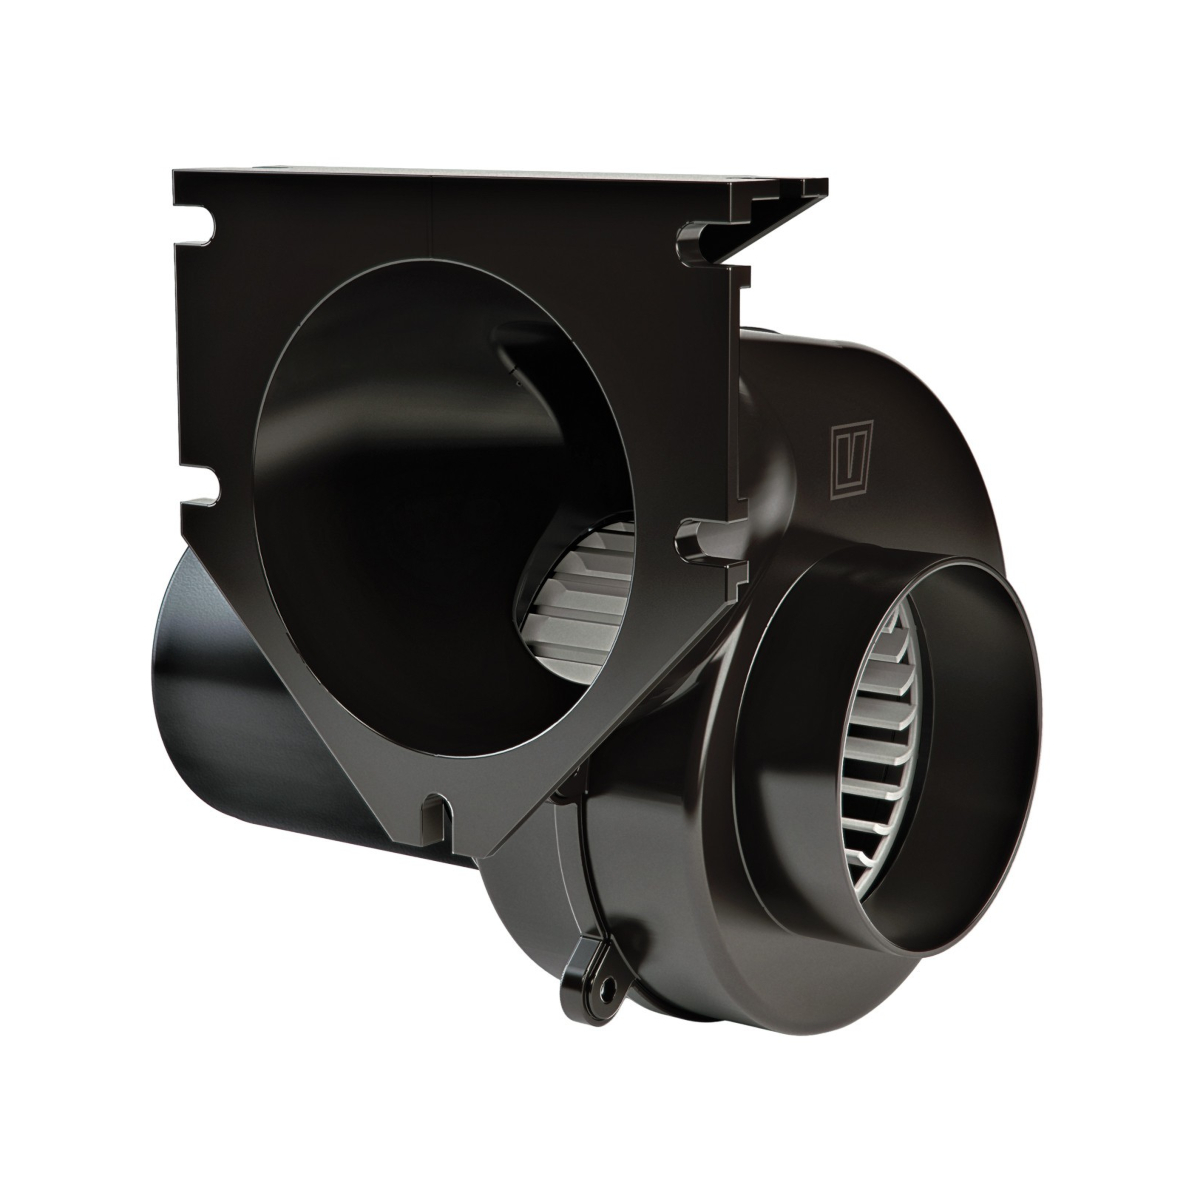 Vetus ventilateur-extracteur en ligne 24 v - ø76 mm